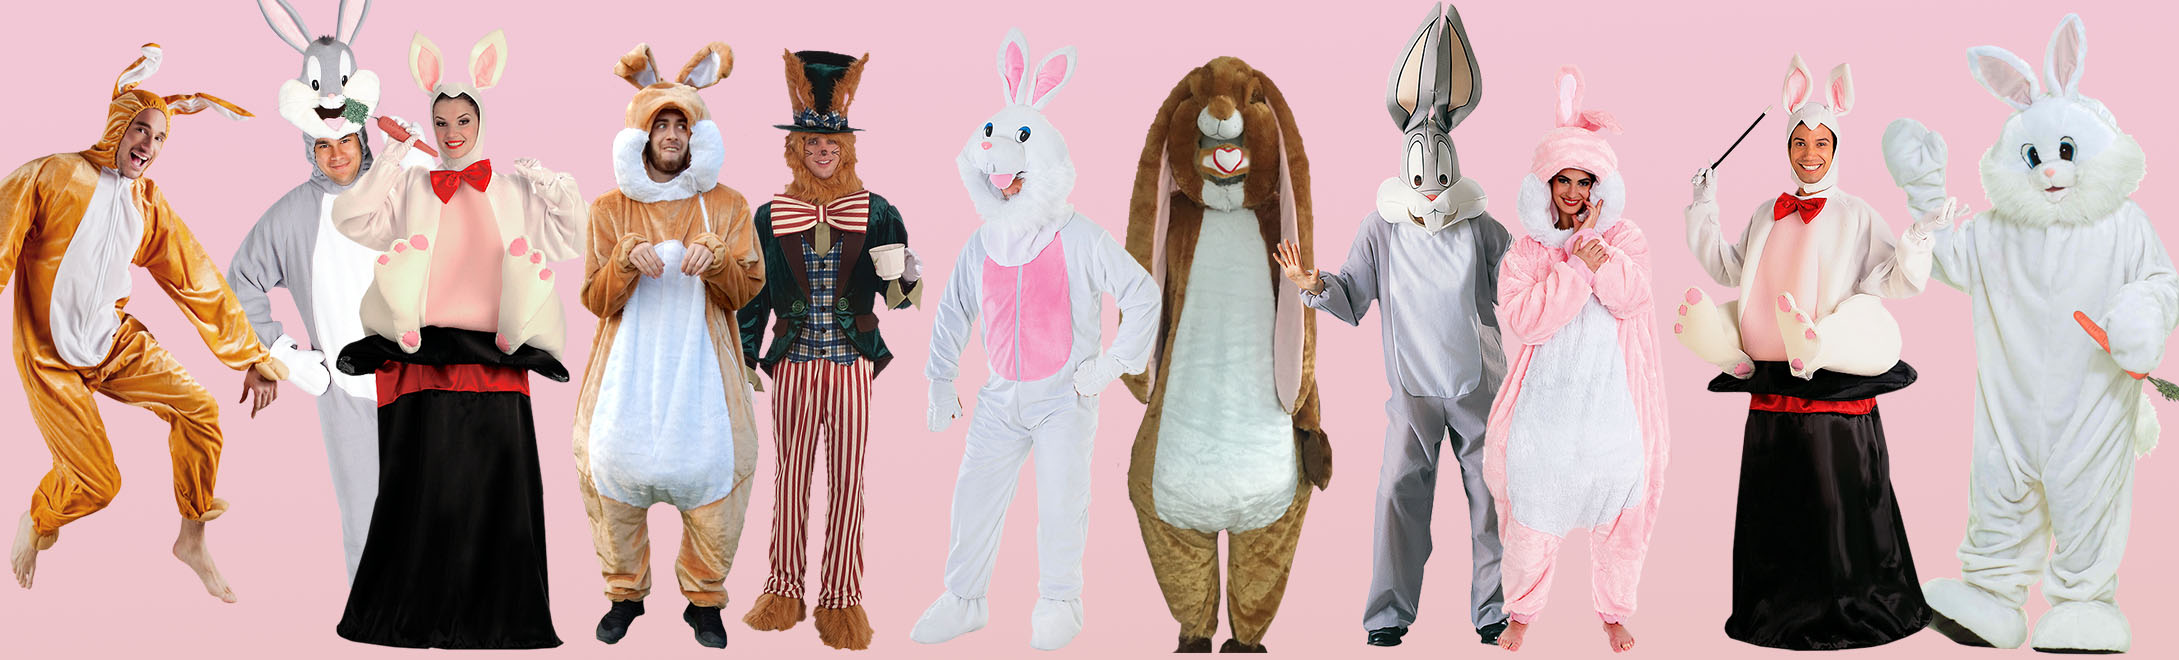 Hasenkostüme | Tierkostüme online bestellen » Kostümpalast